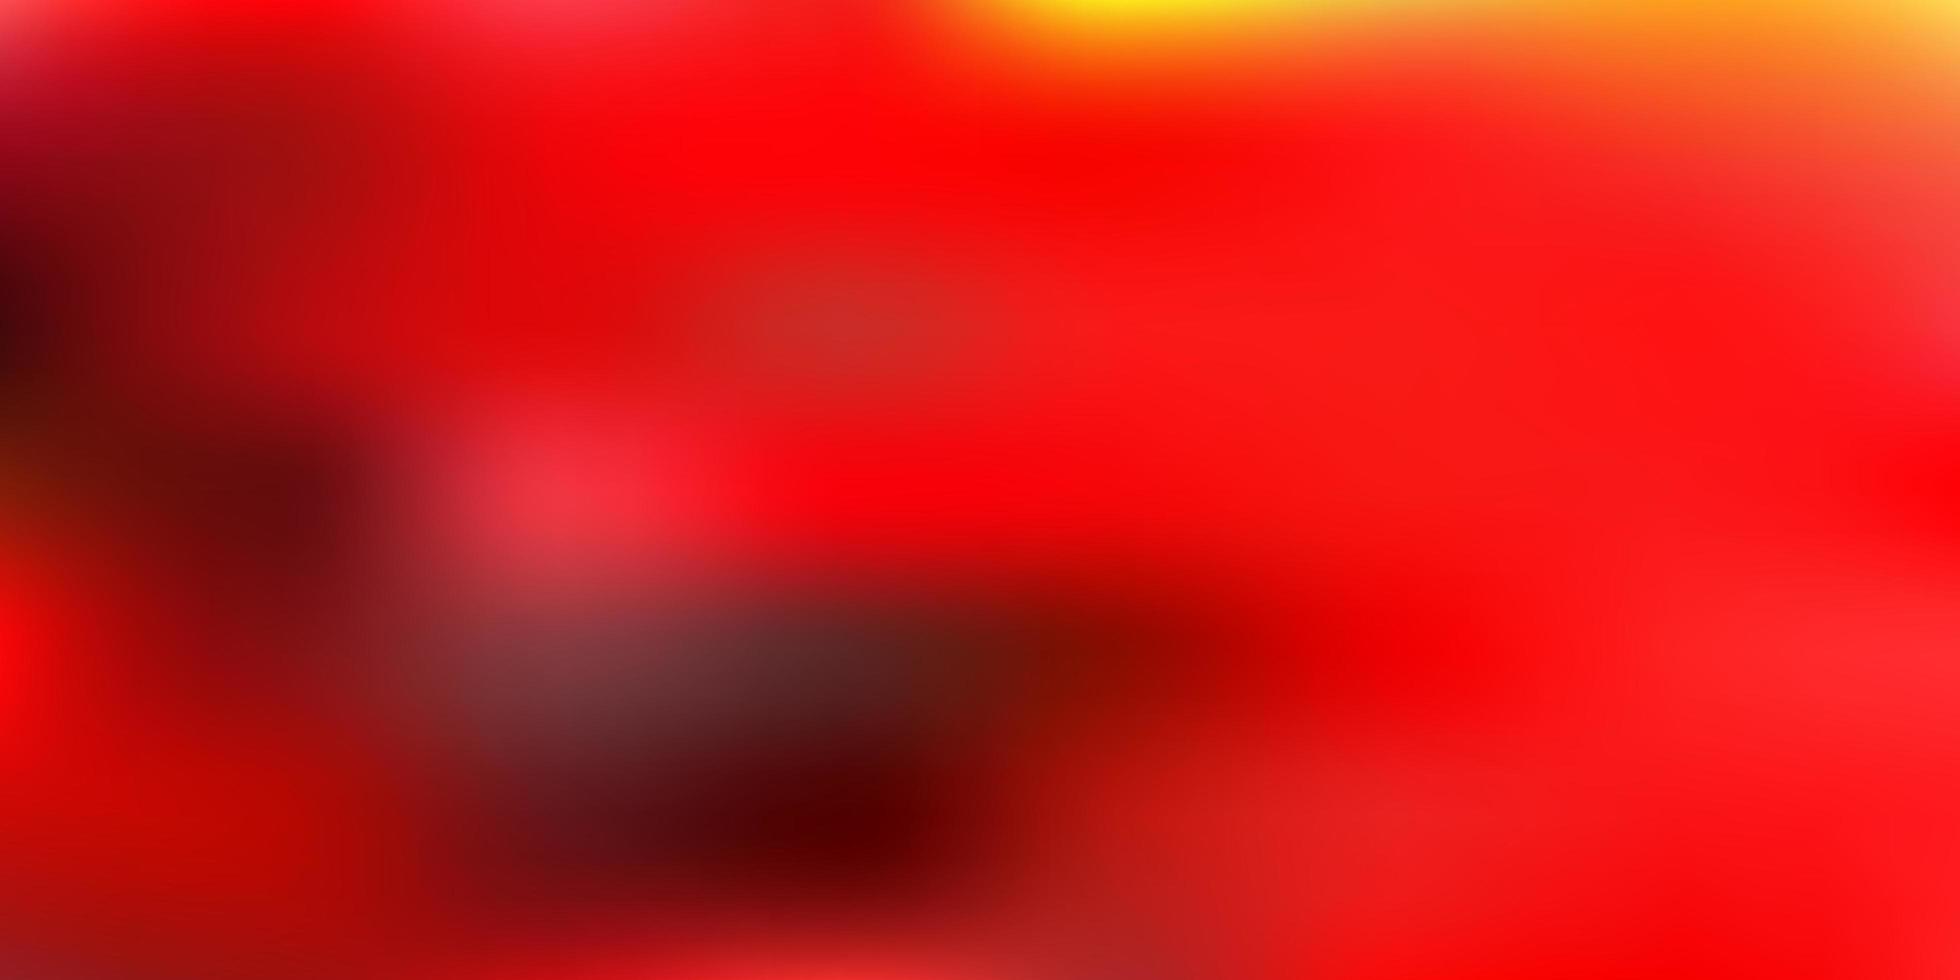 Light red vector gradient blur background.